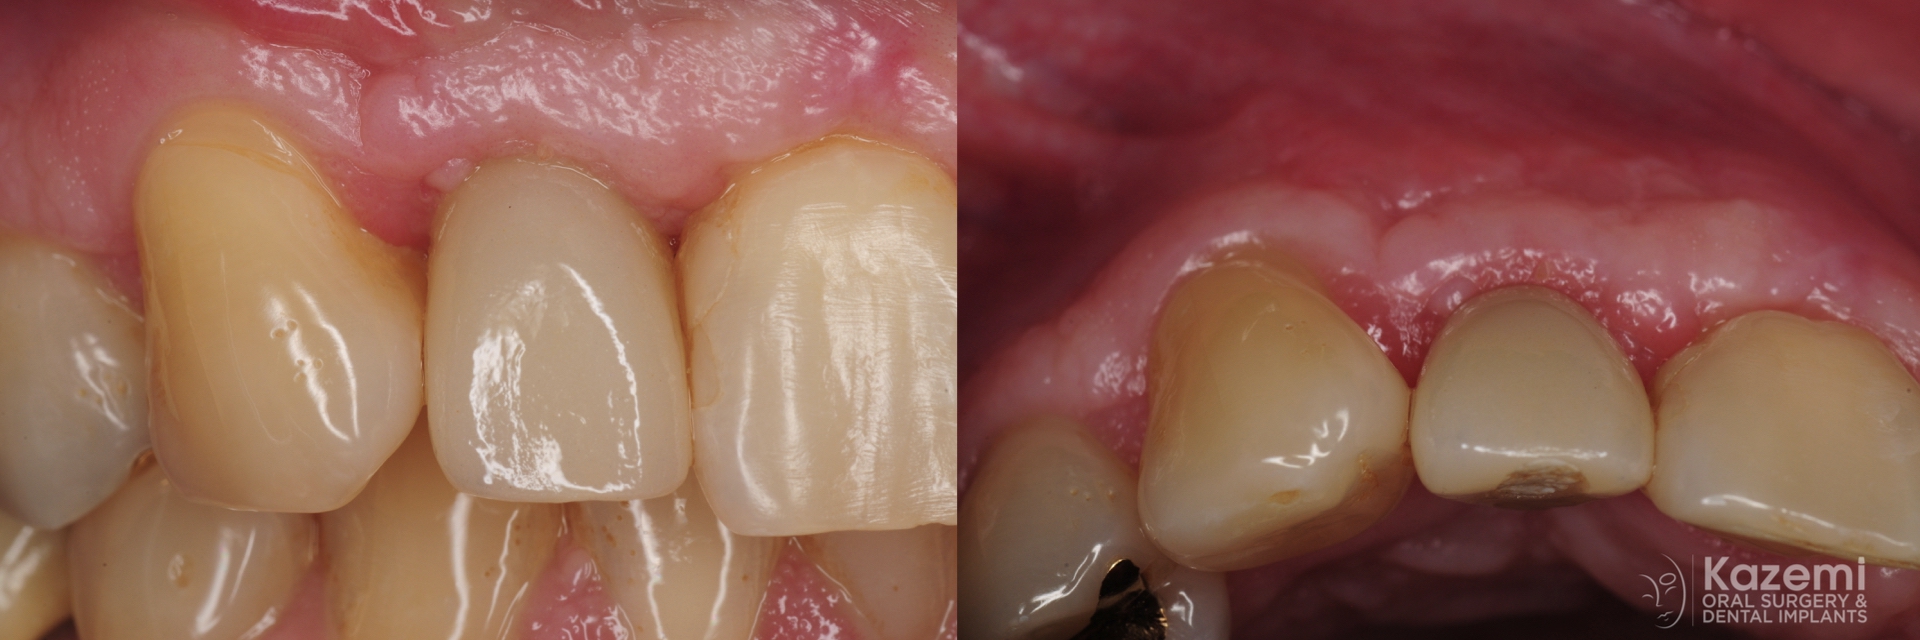 4.-dental-implant-crown-gum-graft-for-recession-kazemi-oral-surgery